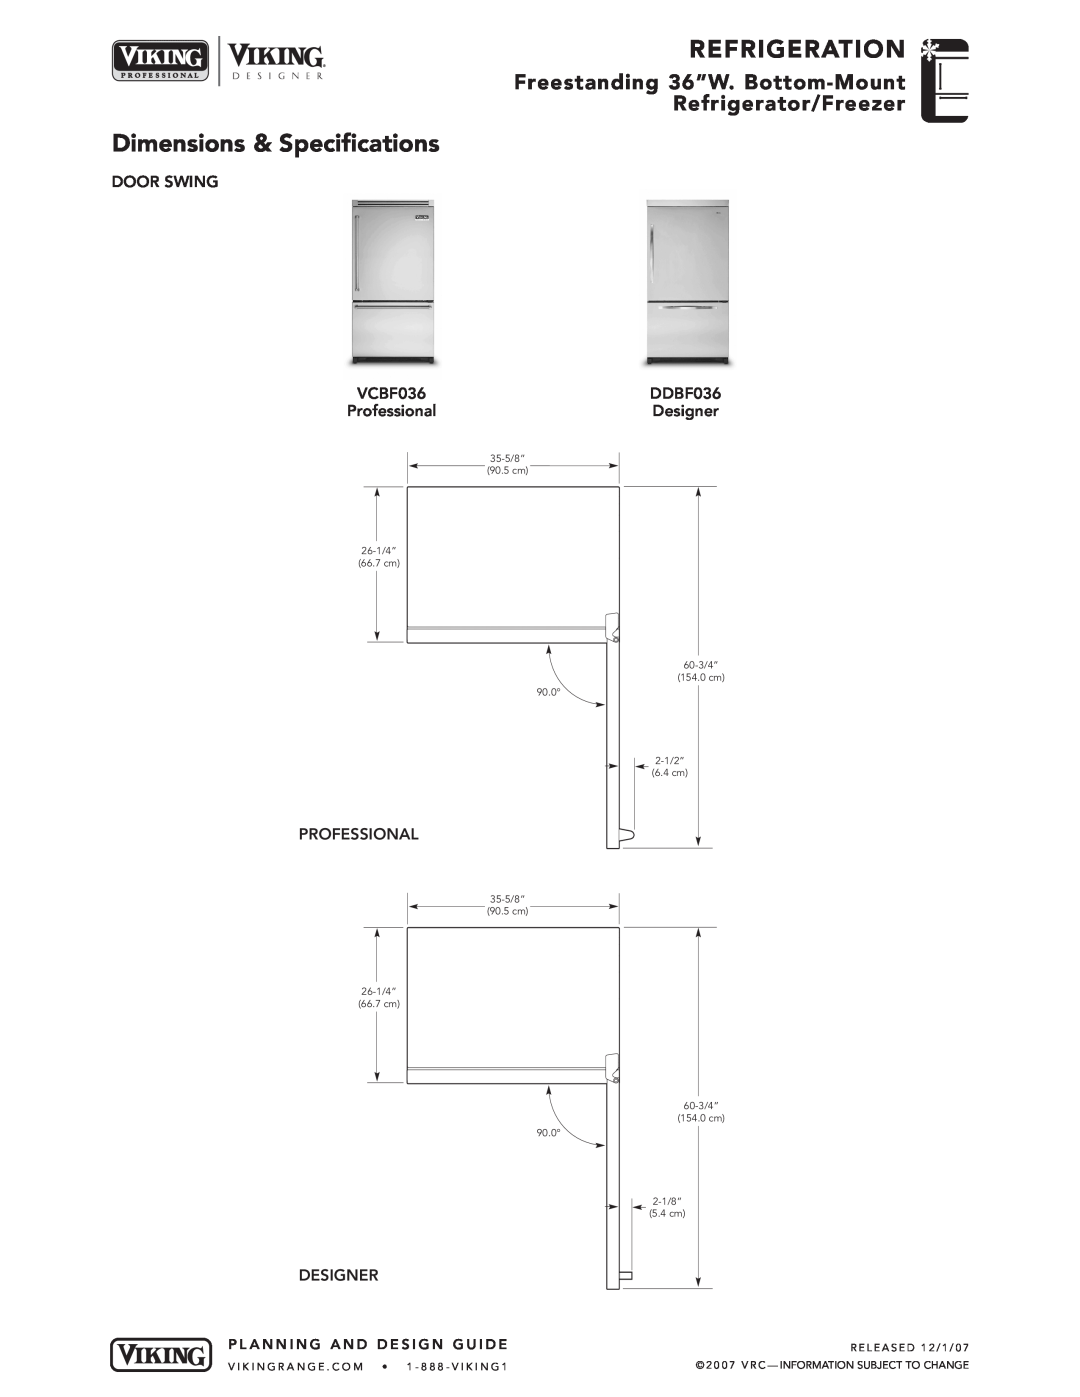 Viking DDBF036*, VCBF036* Refrigeration, Dimensions & Specifications, Freestanding 36”W. Bottom-Mount Refrigerator/Freezer 